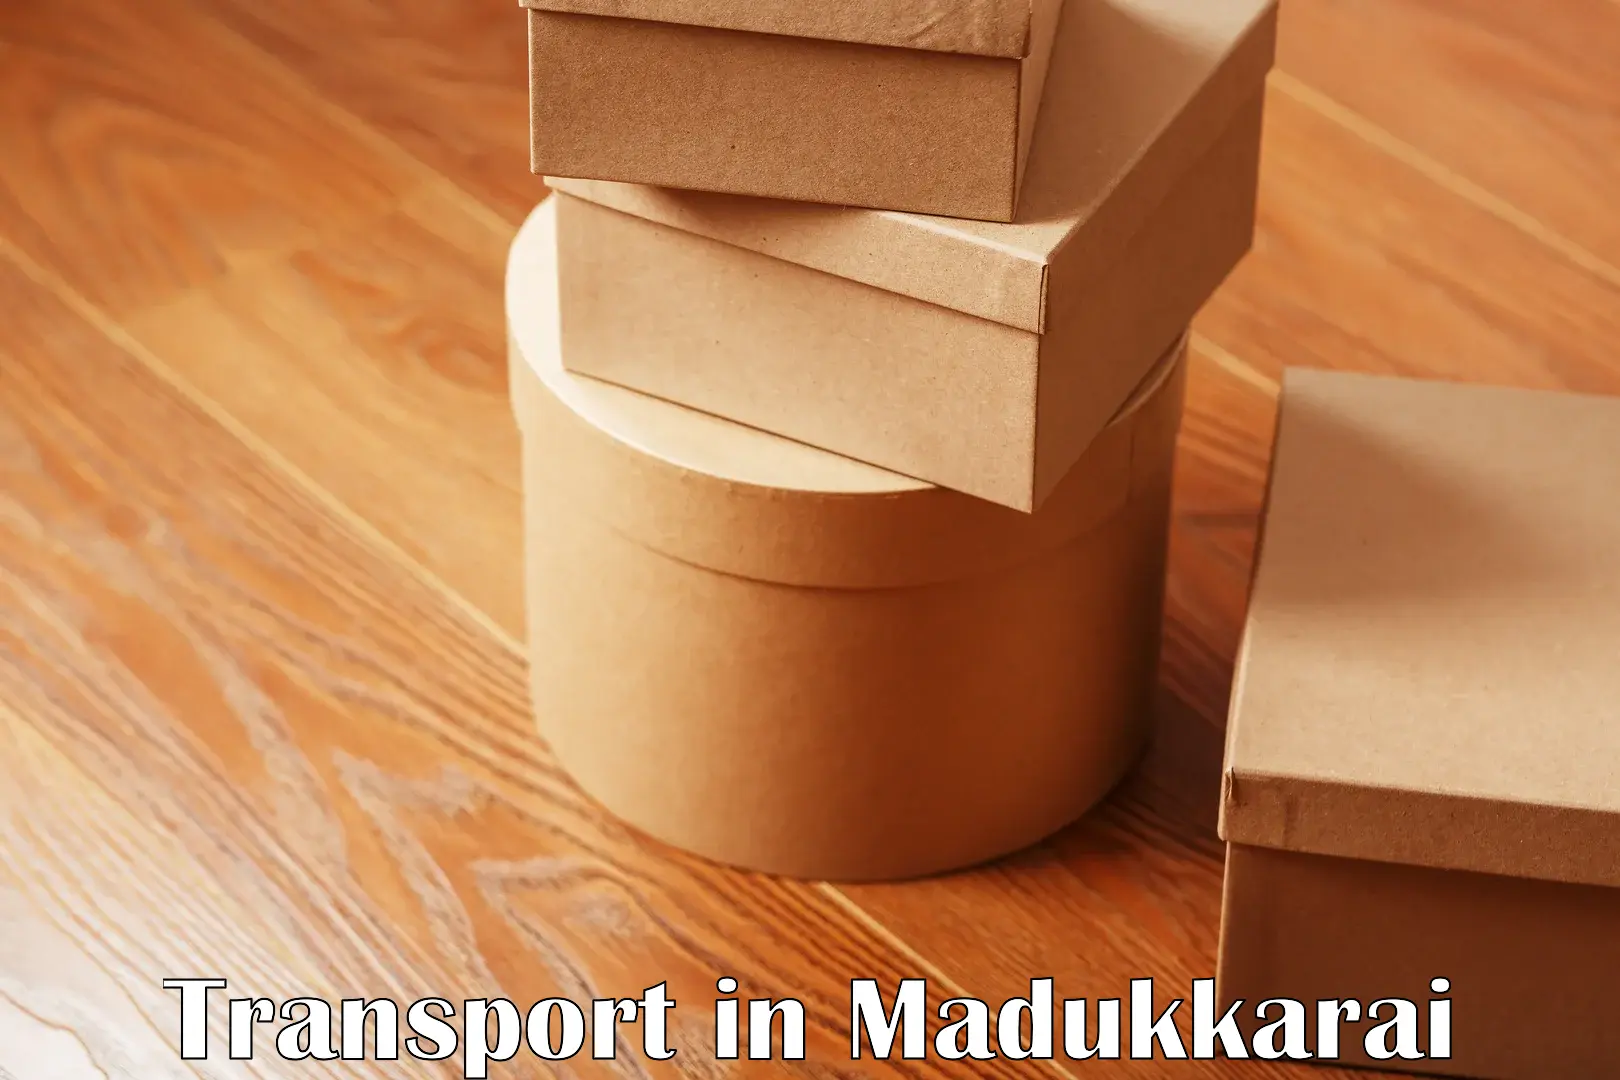 Online transport in Madukkarai